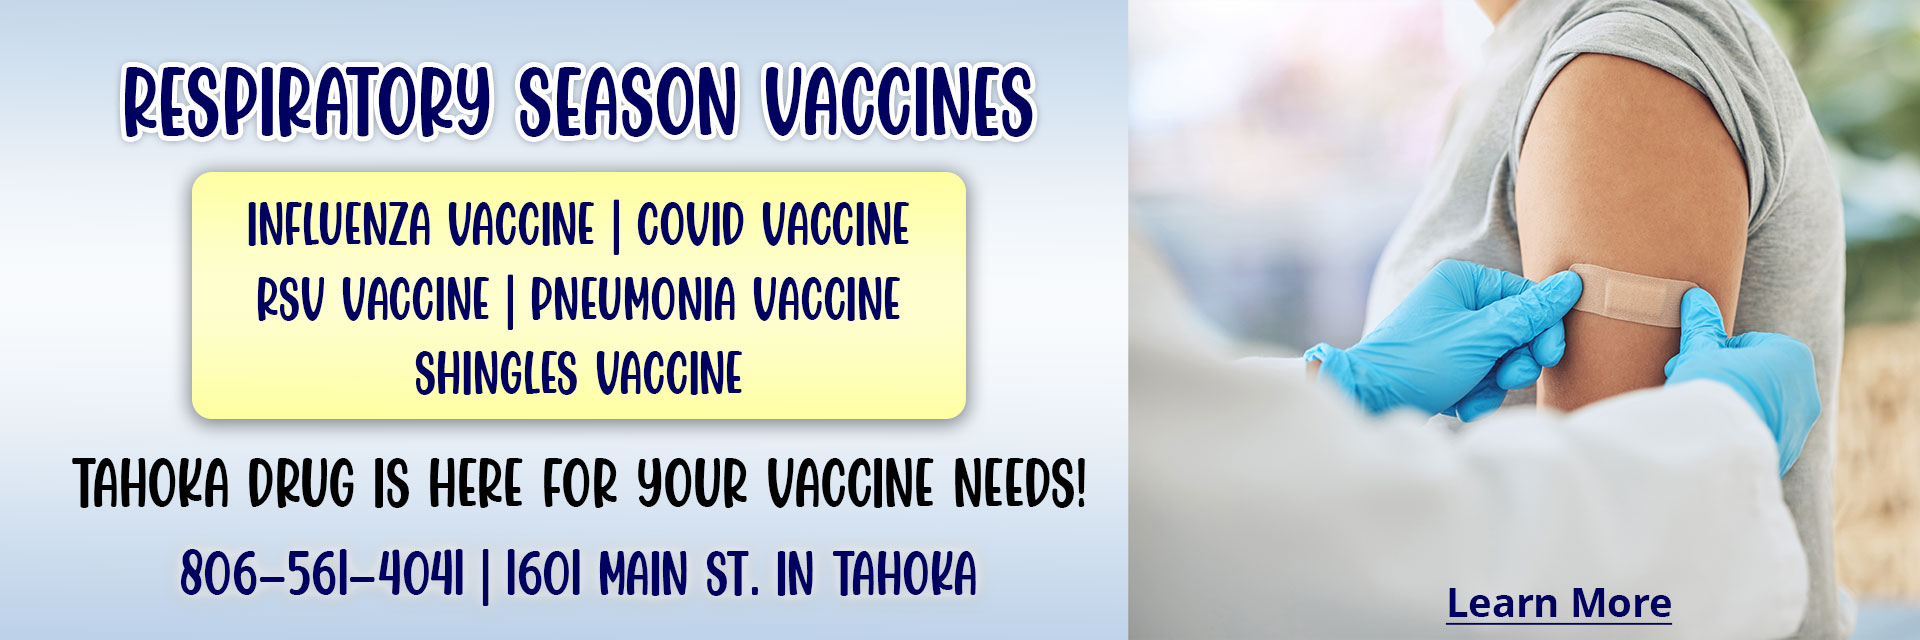 Respiratory season vaccines

Influenza vaccine, covid vaccine, rsv vaccine, pneumonia vaccine, shingles vaccine

Tahoka drug is here for your vaccine needs!

806-561-4041 | 1601 main St. in Tahoka